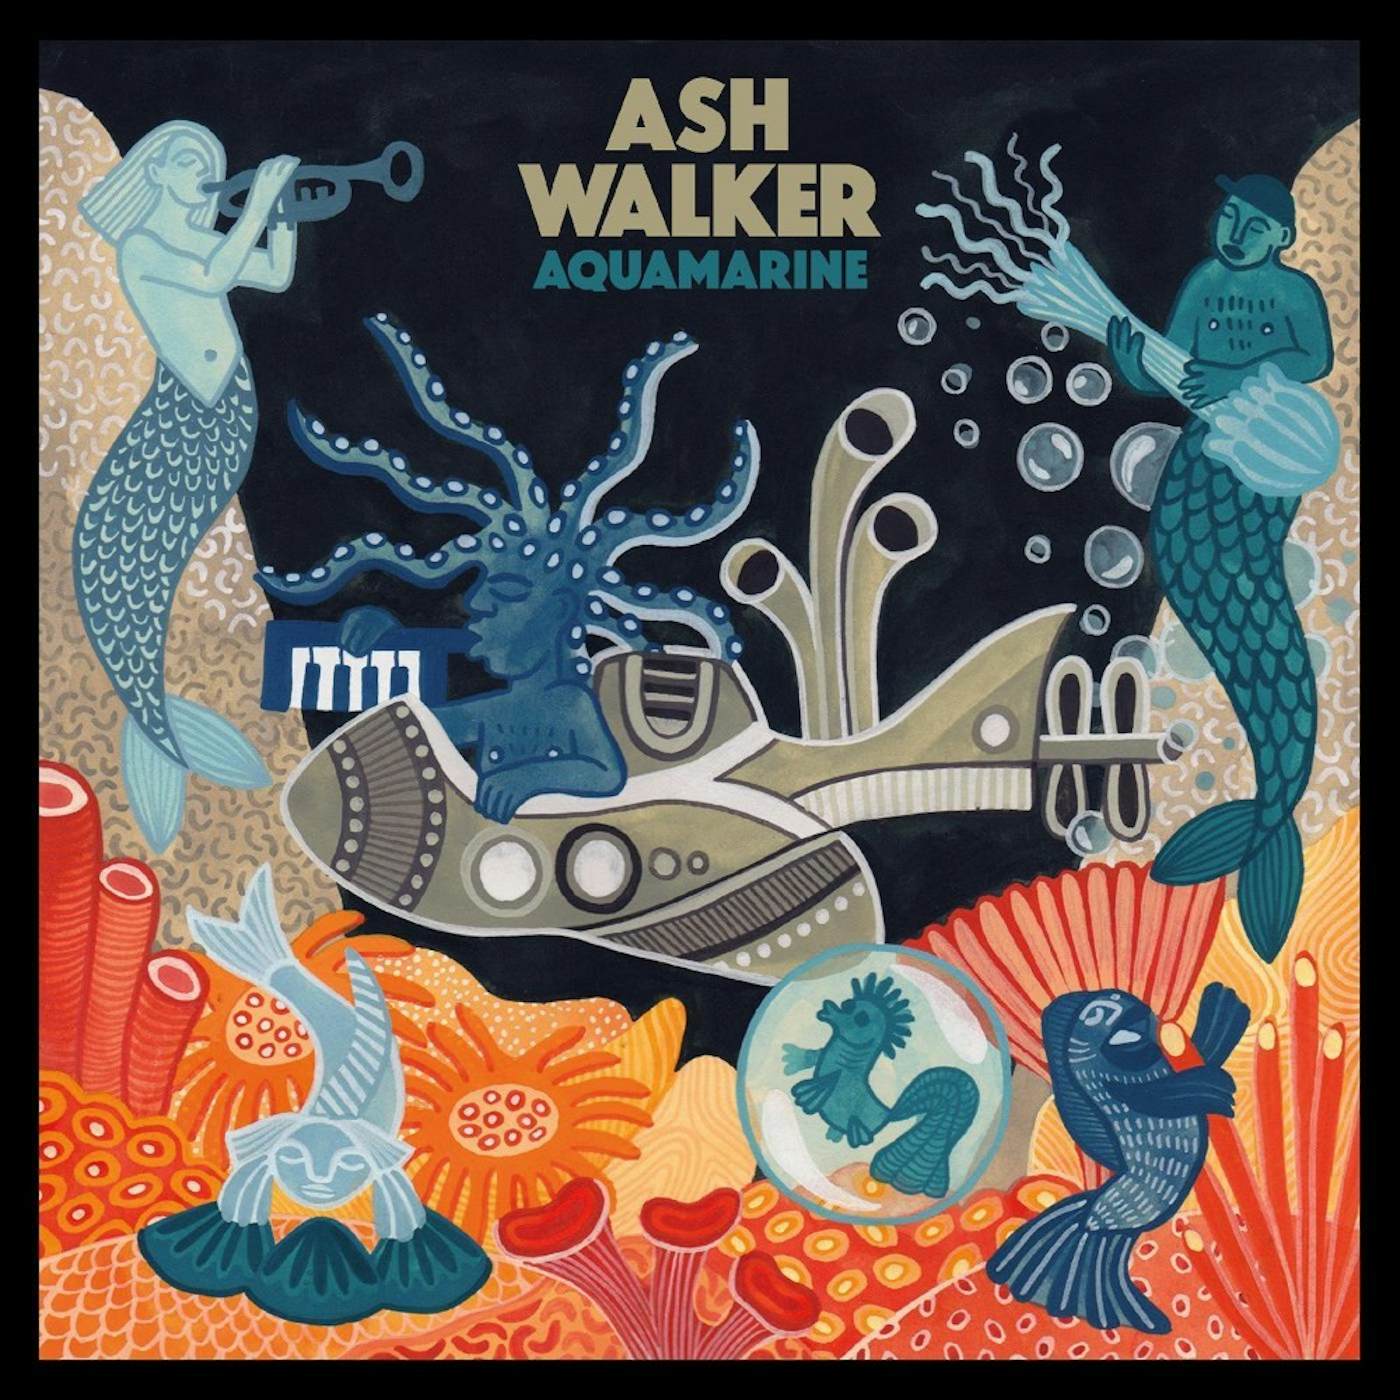 Ash Walker Aquamarine CD